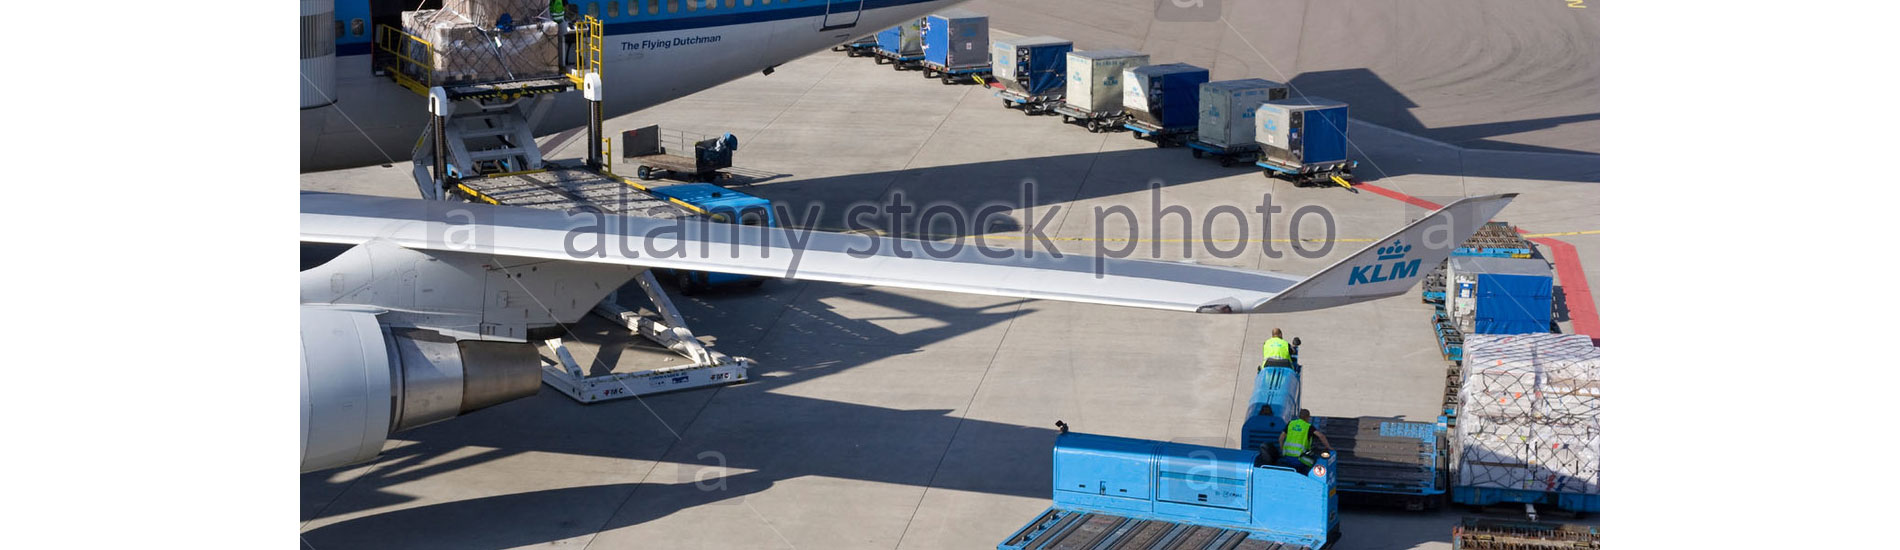 KLM Cargo Plane off Loading